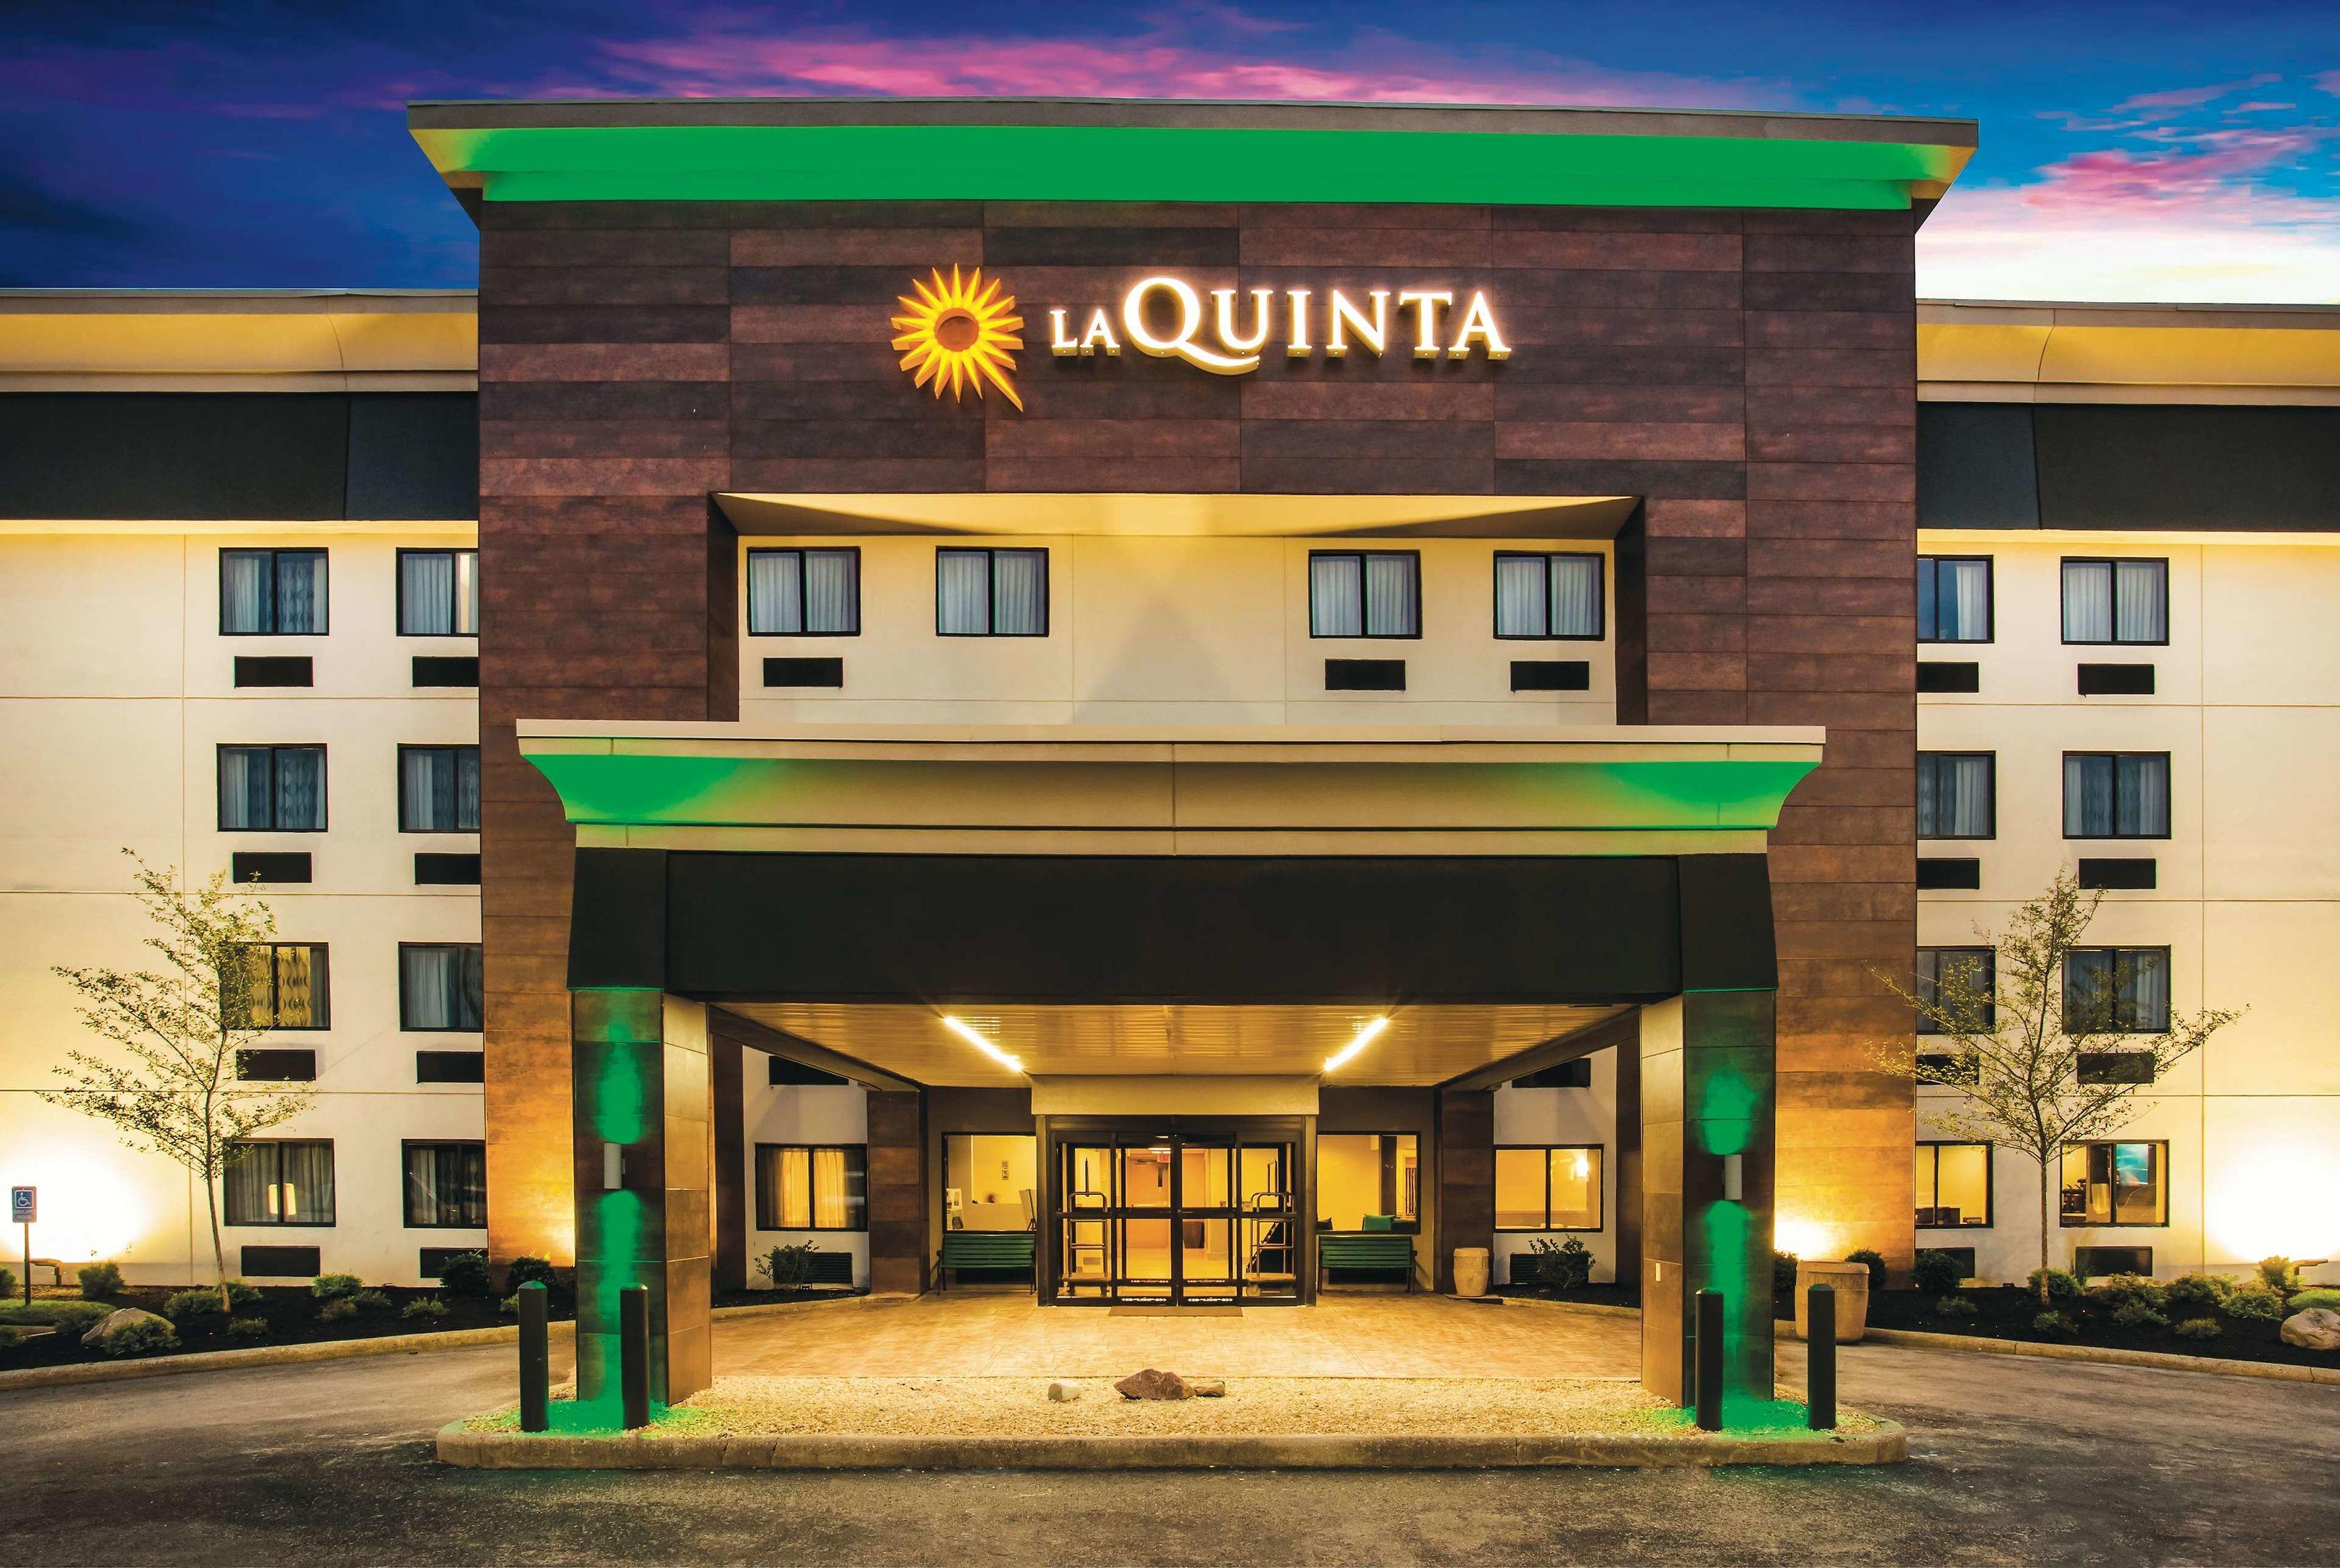 La Quinta Inn Cincinnati Northeast